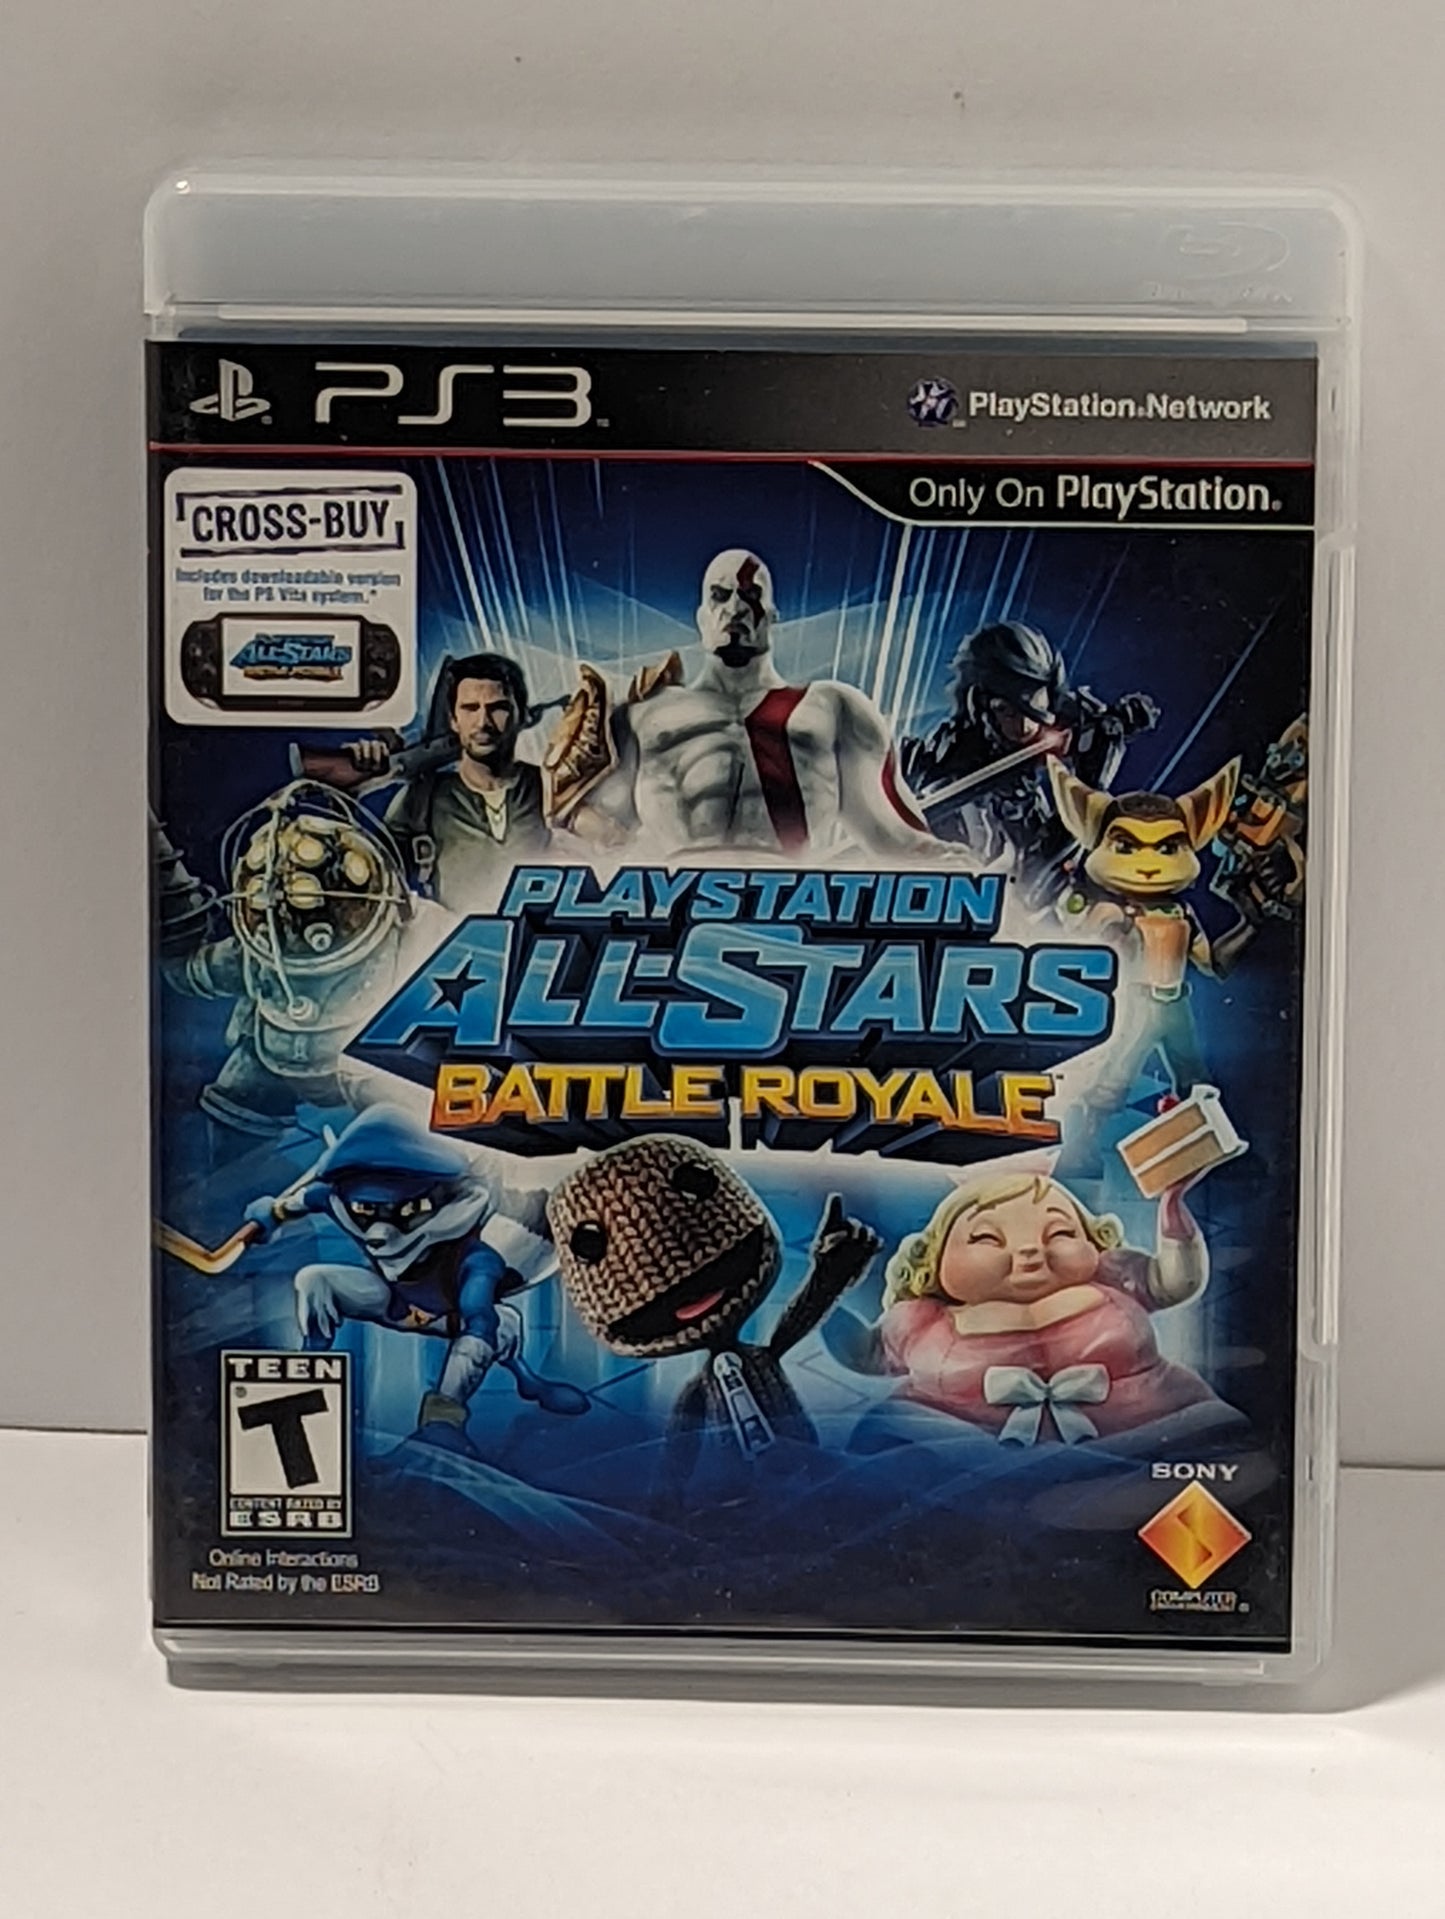 PS3 Playstation All Stars Battle Royal